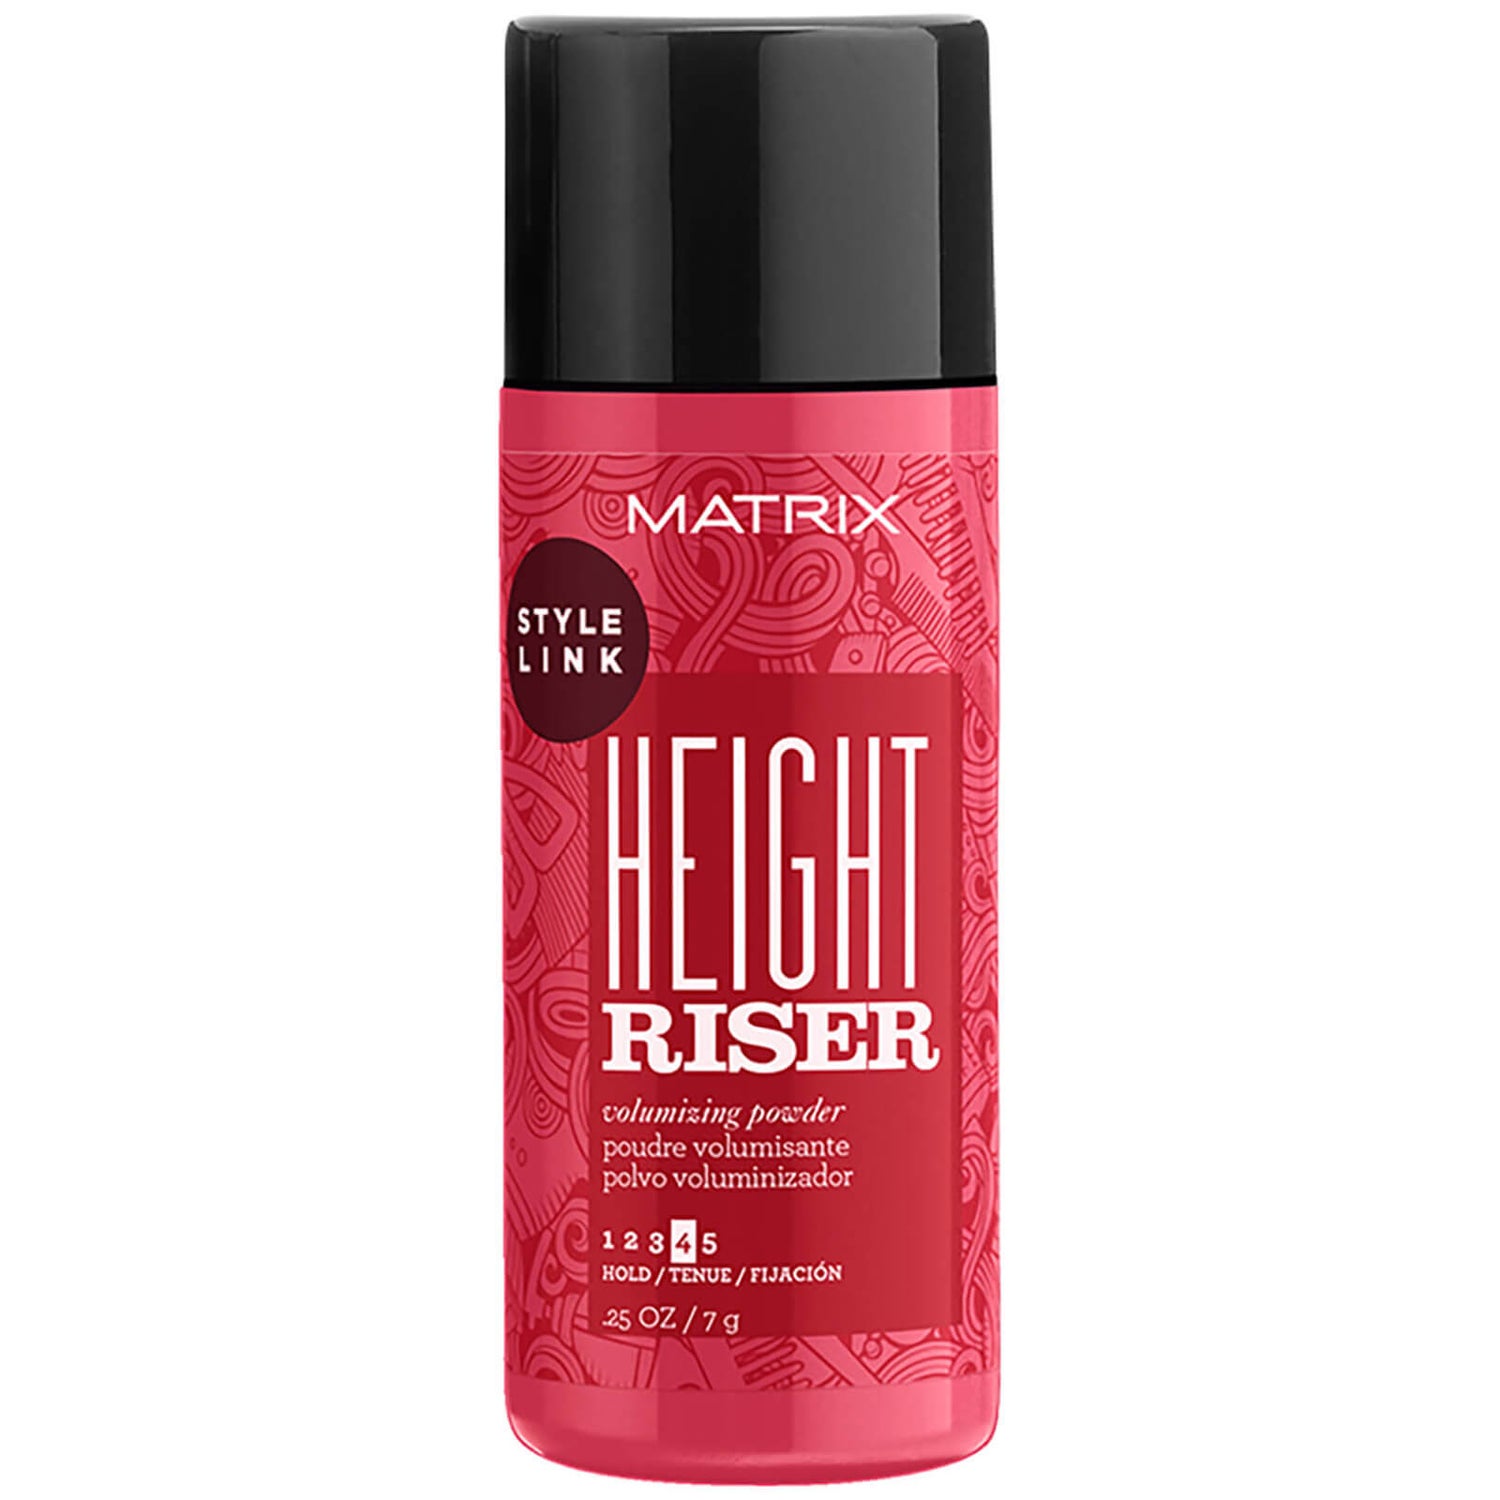 Matrix Style Link Height Riser Volumising Powder